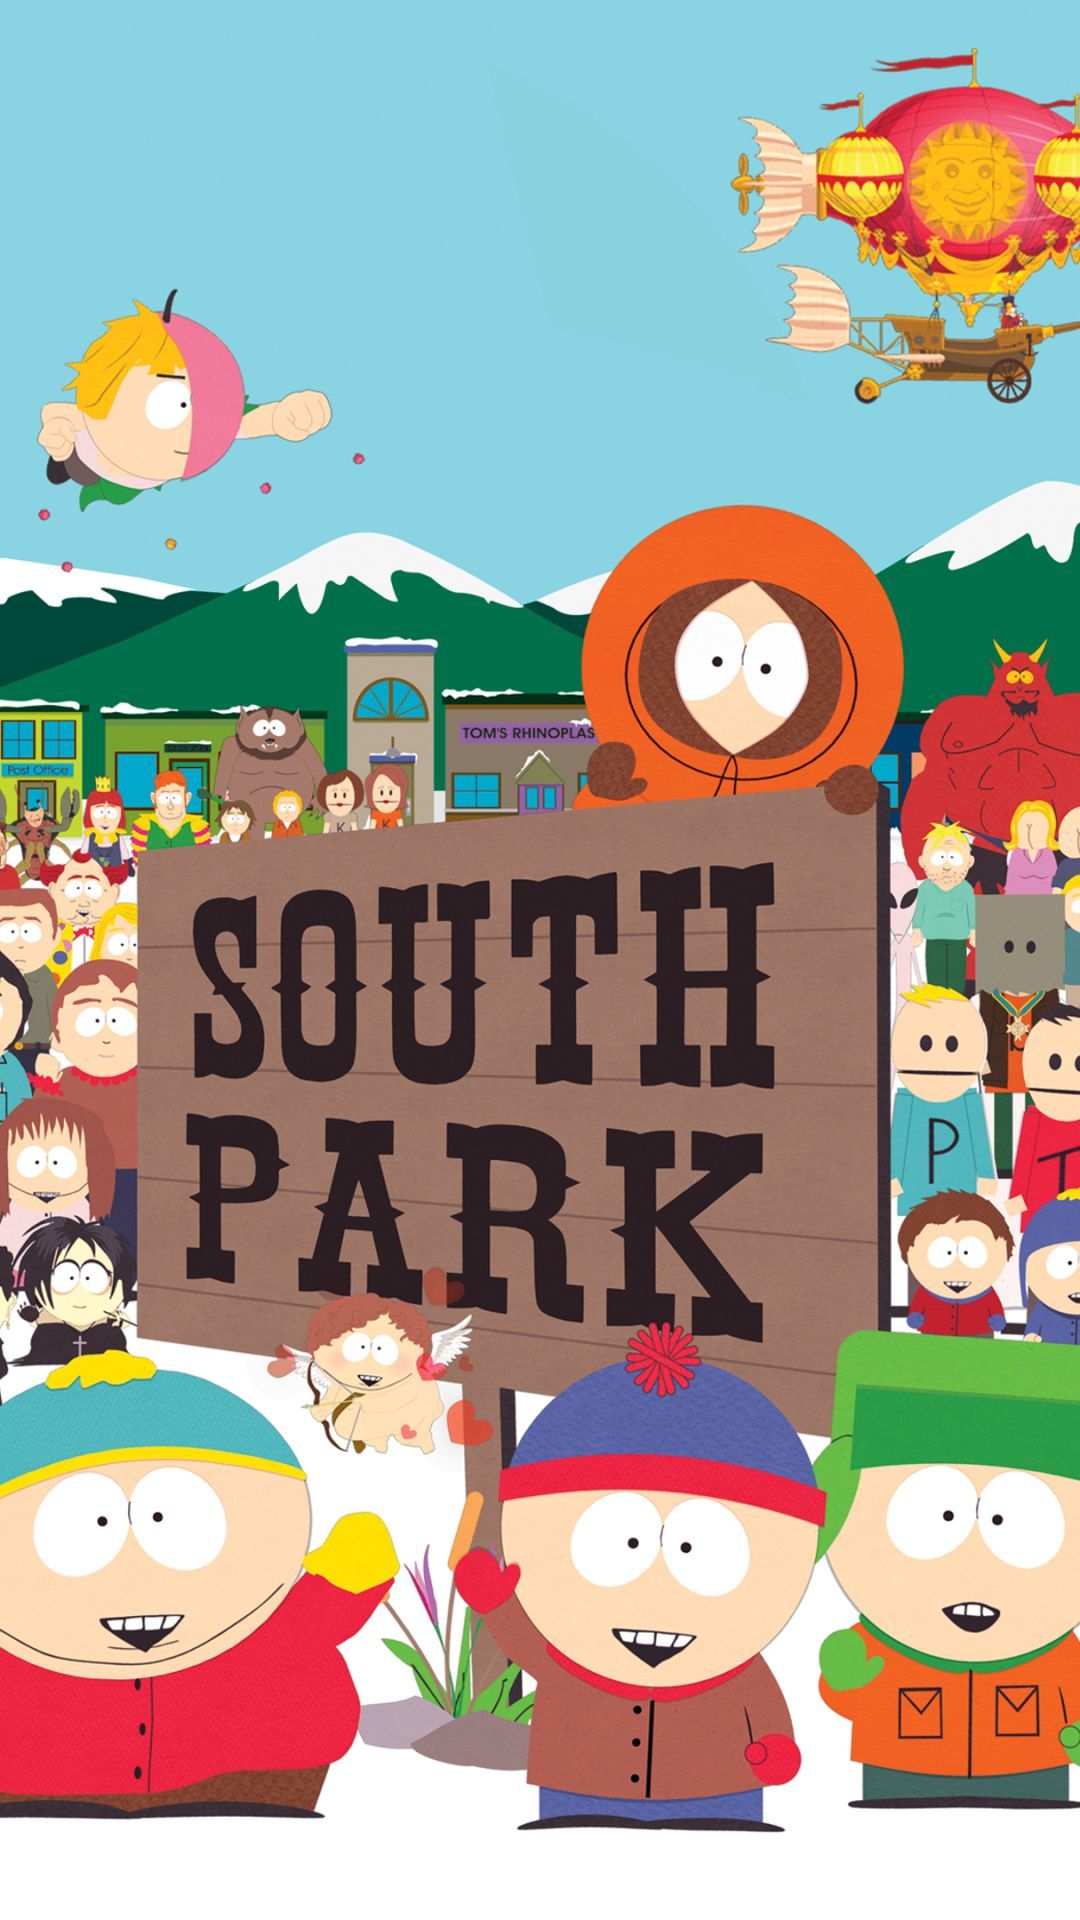 Fondos de pantalla de South Park - FondosMil